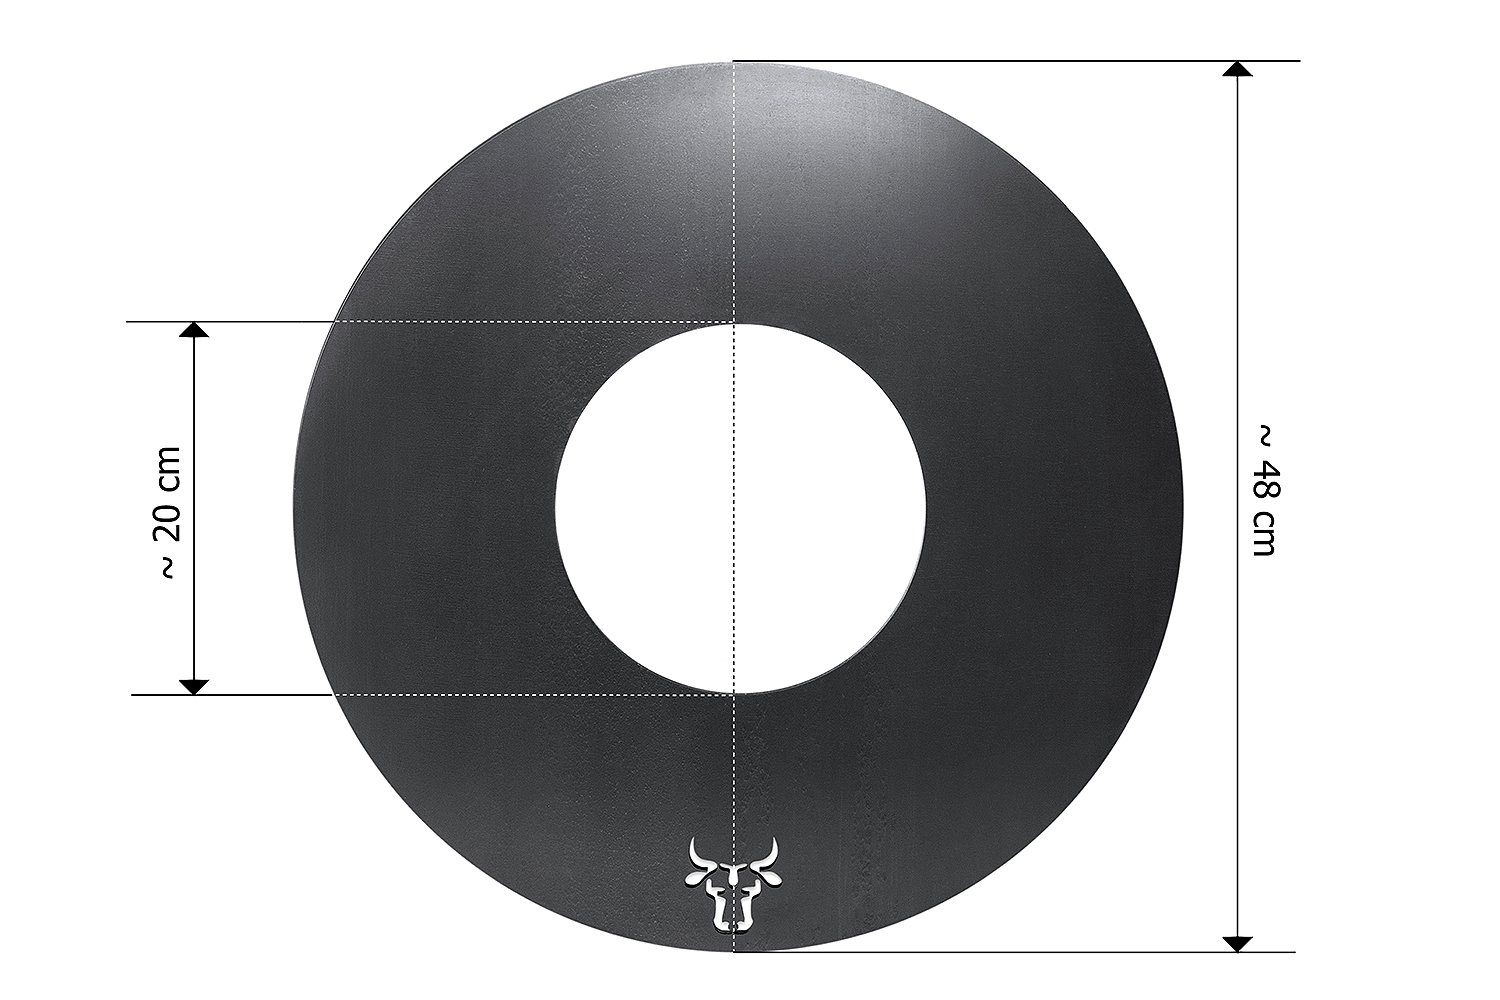 für tuning-art 48cm Plancha Grillring Grillplatte GR01-48 Feuerplatte Kugelgrill BBQ-Platte